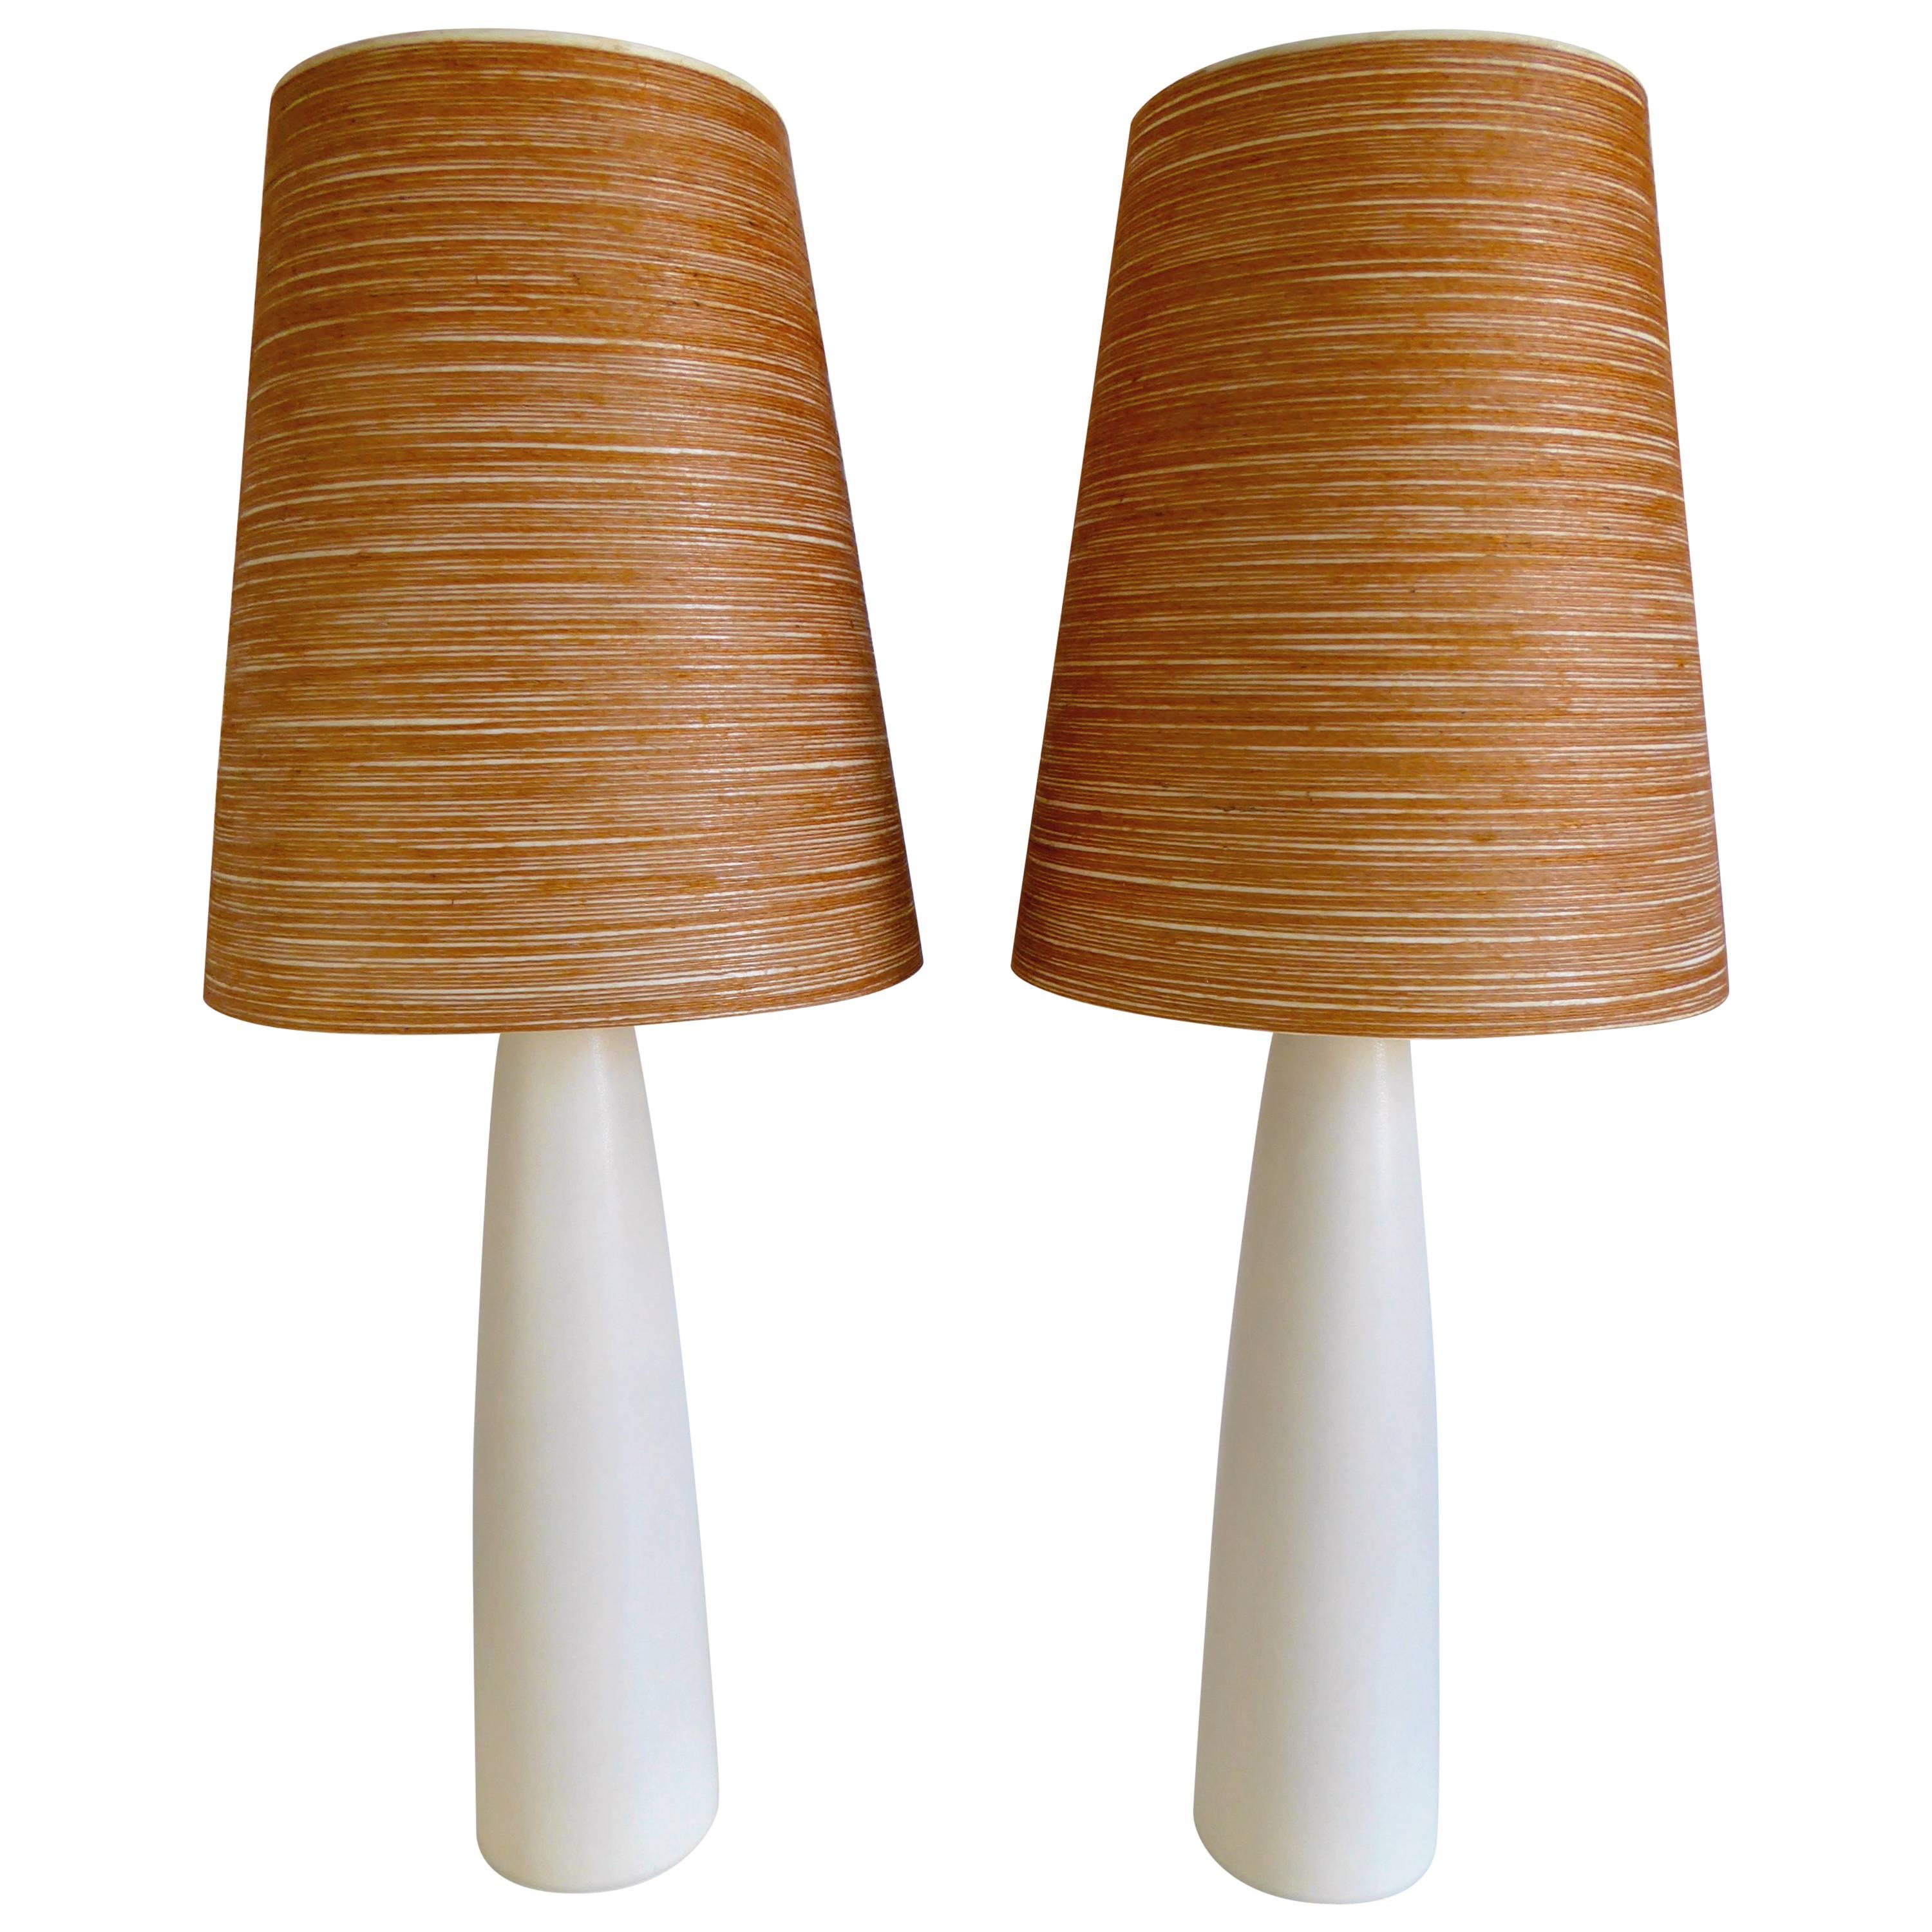 Mid-Century Modern Pair of Ceramic Lotte Lamps